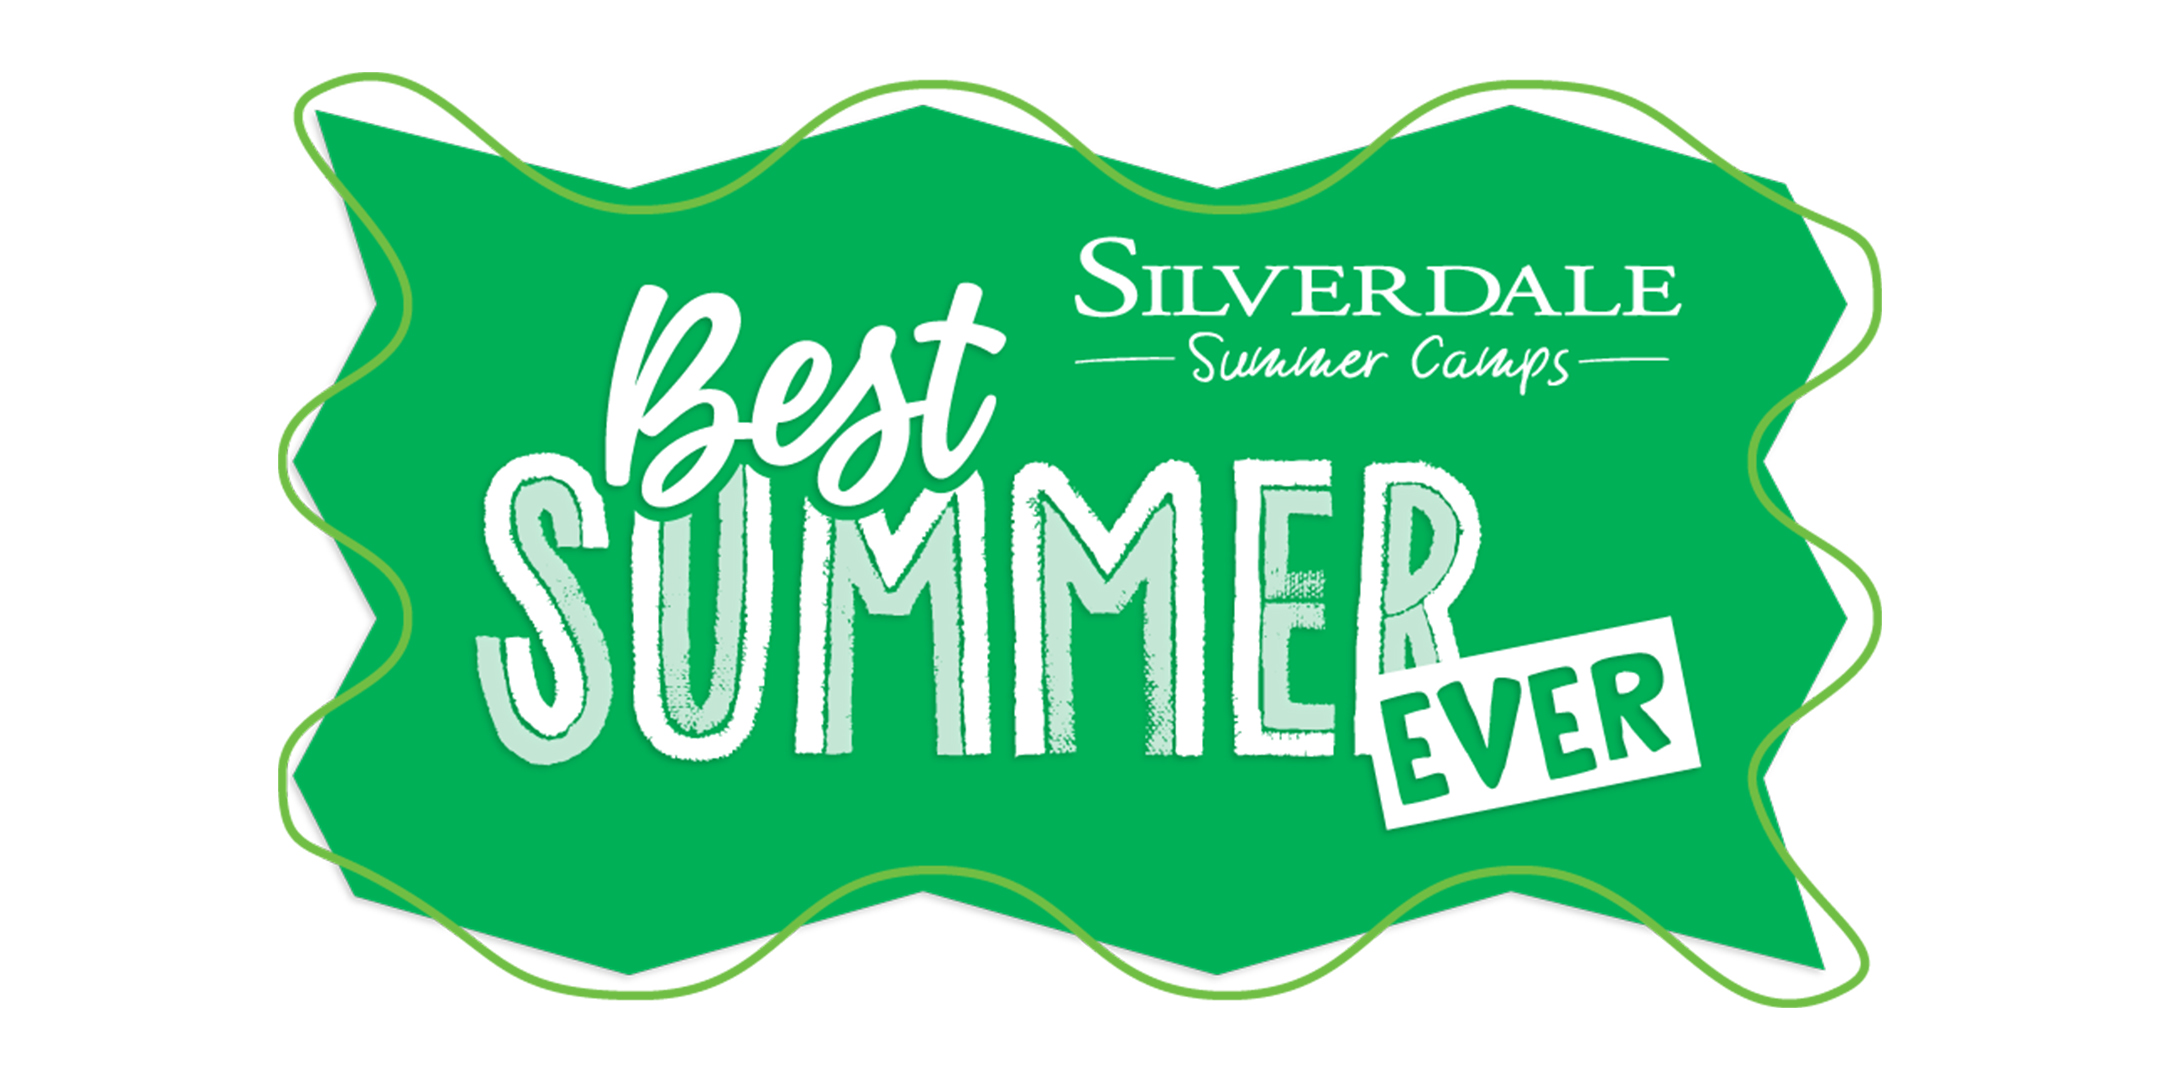 Silverdale Summer Camps | Best Summer Ever!